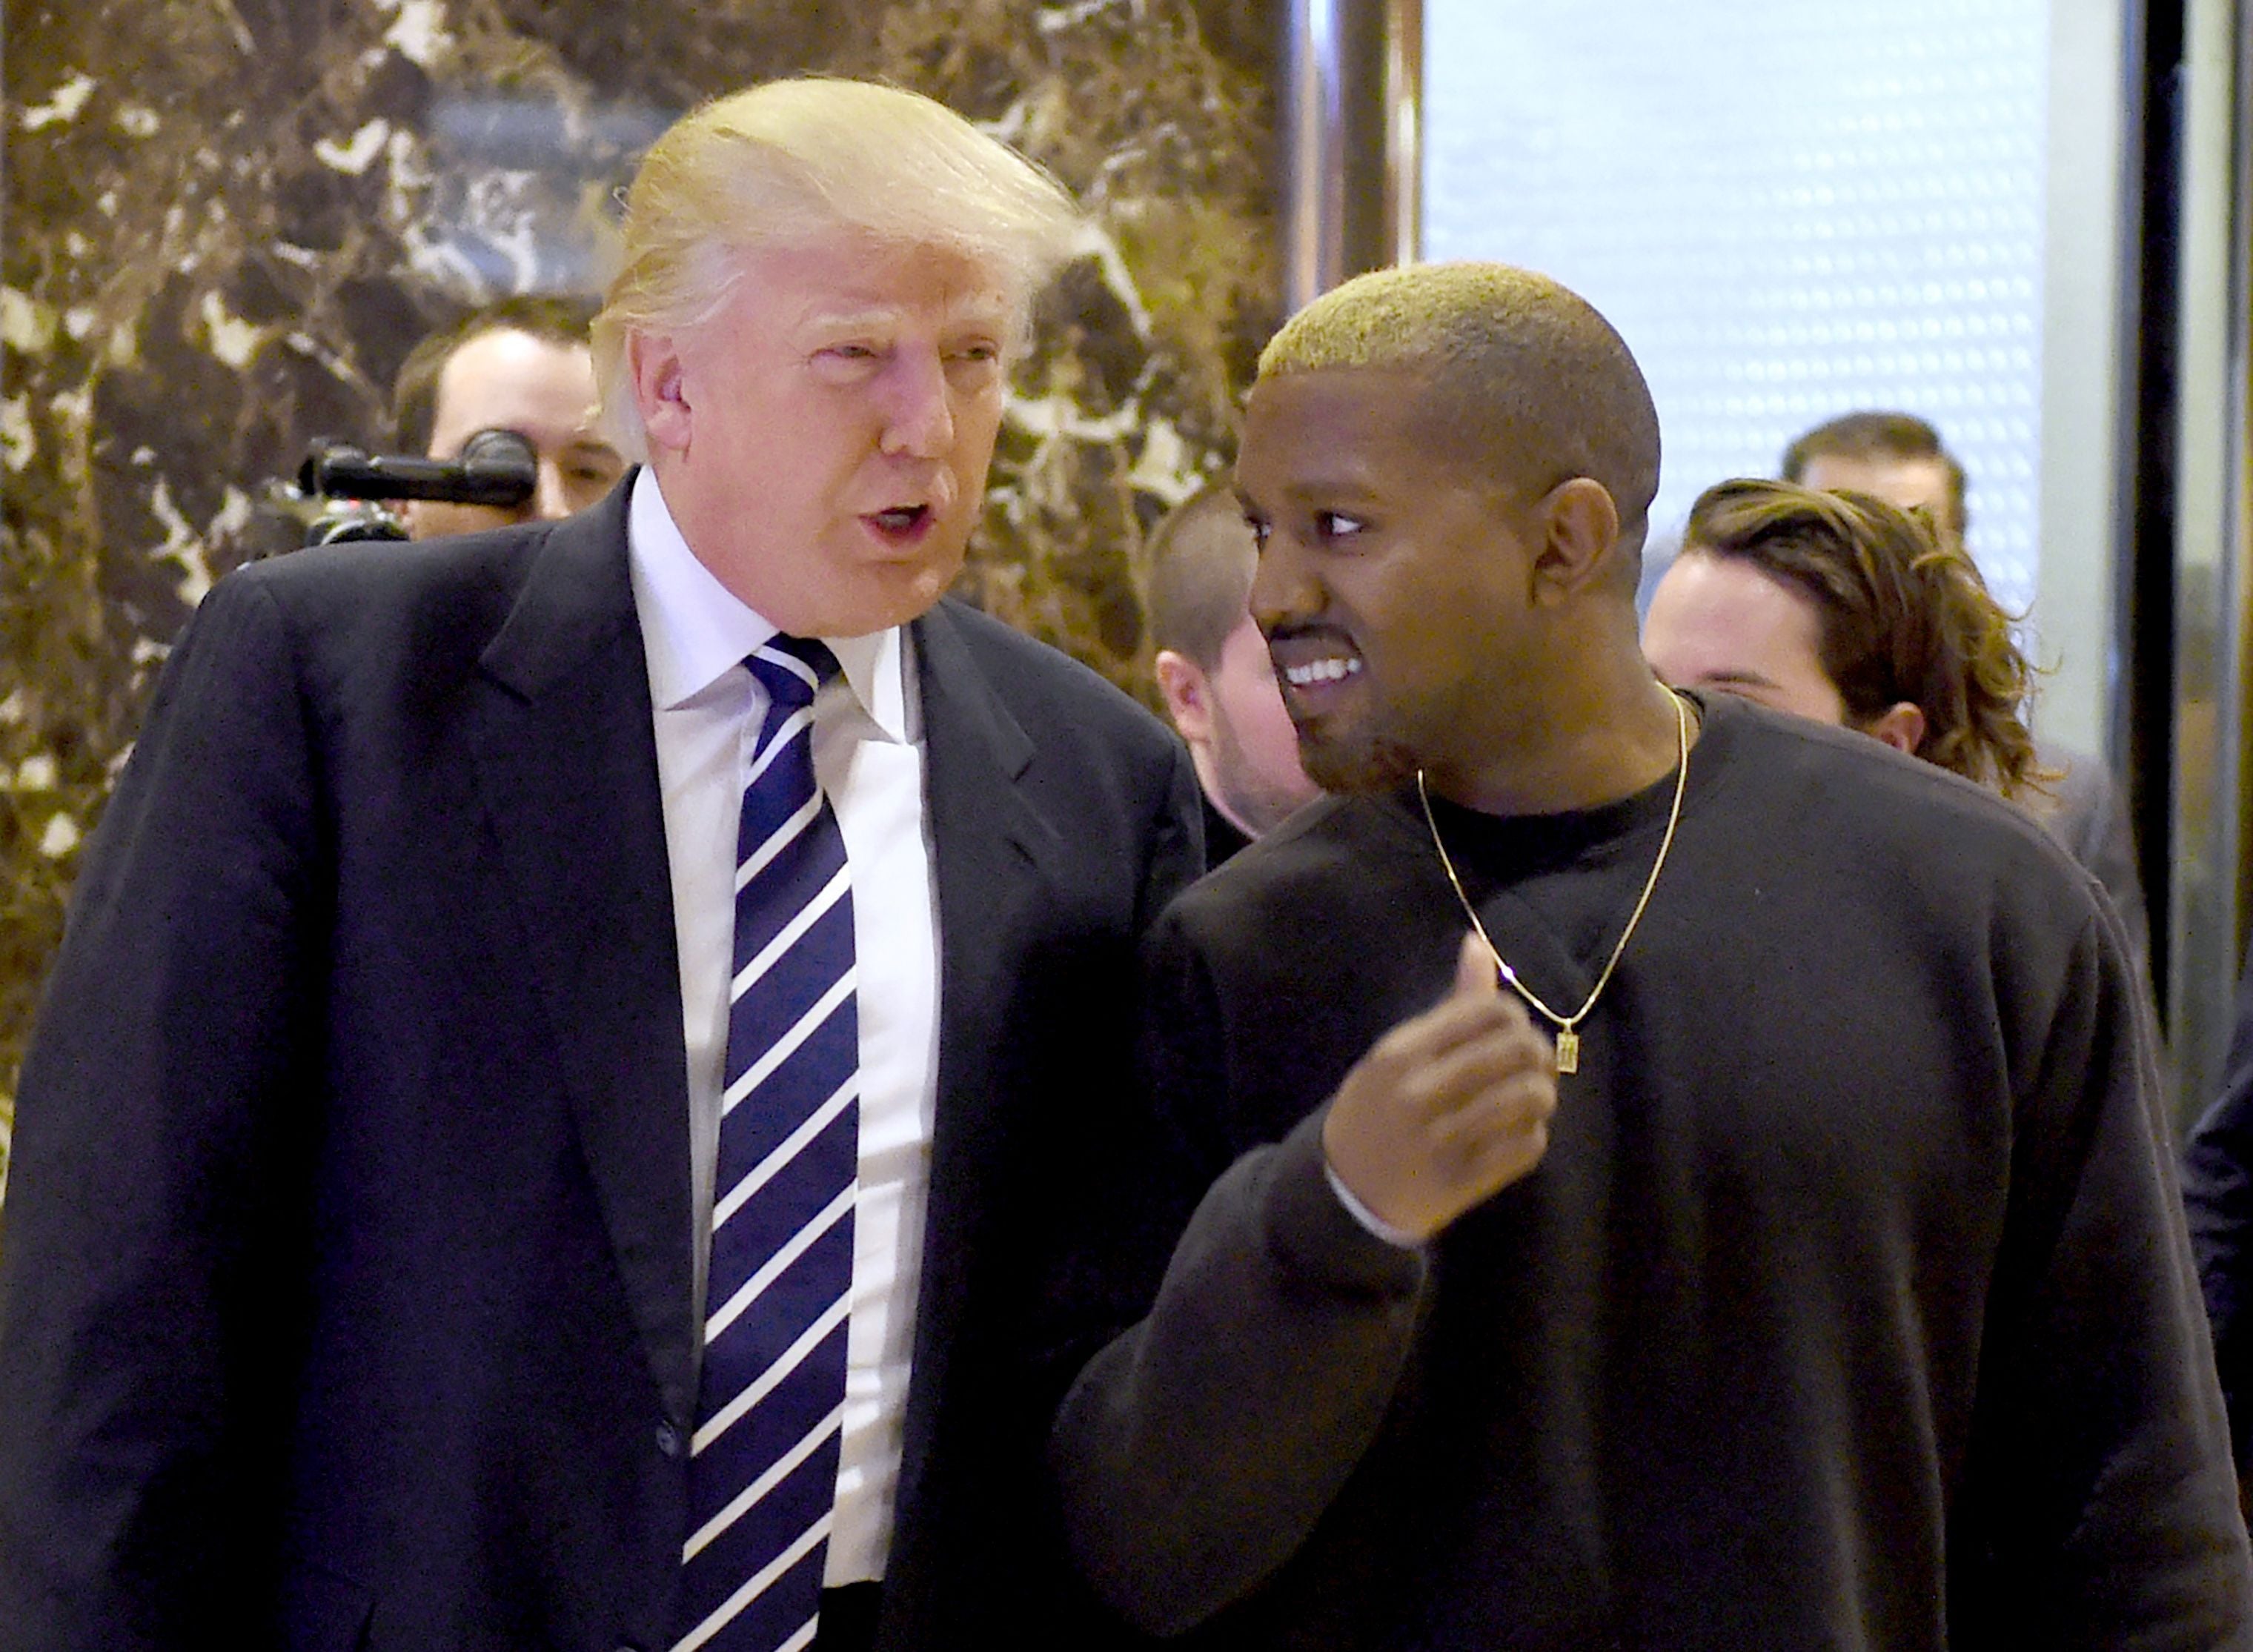 Rapper Kanye West and former president Donald Trump